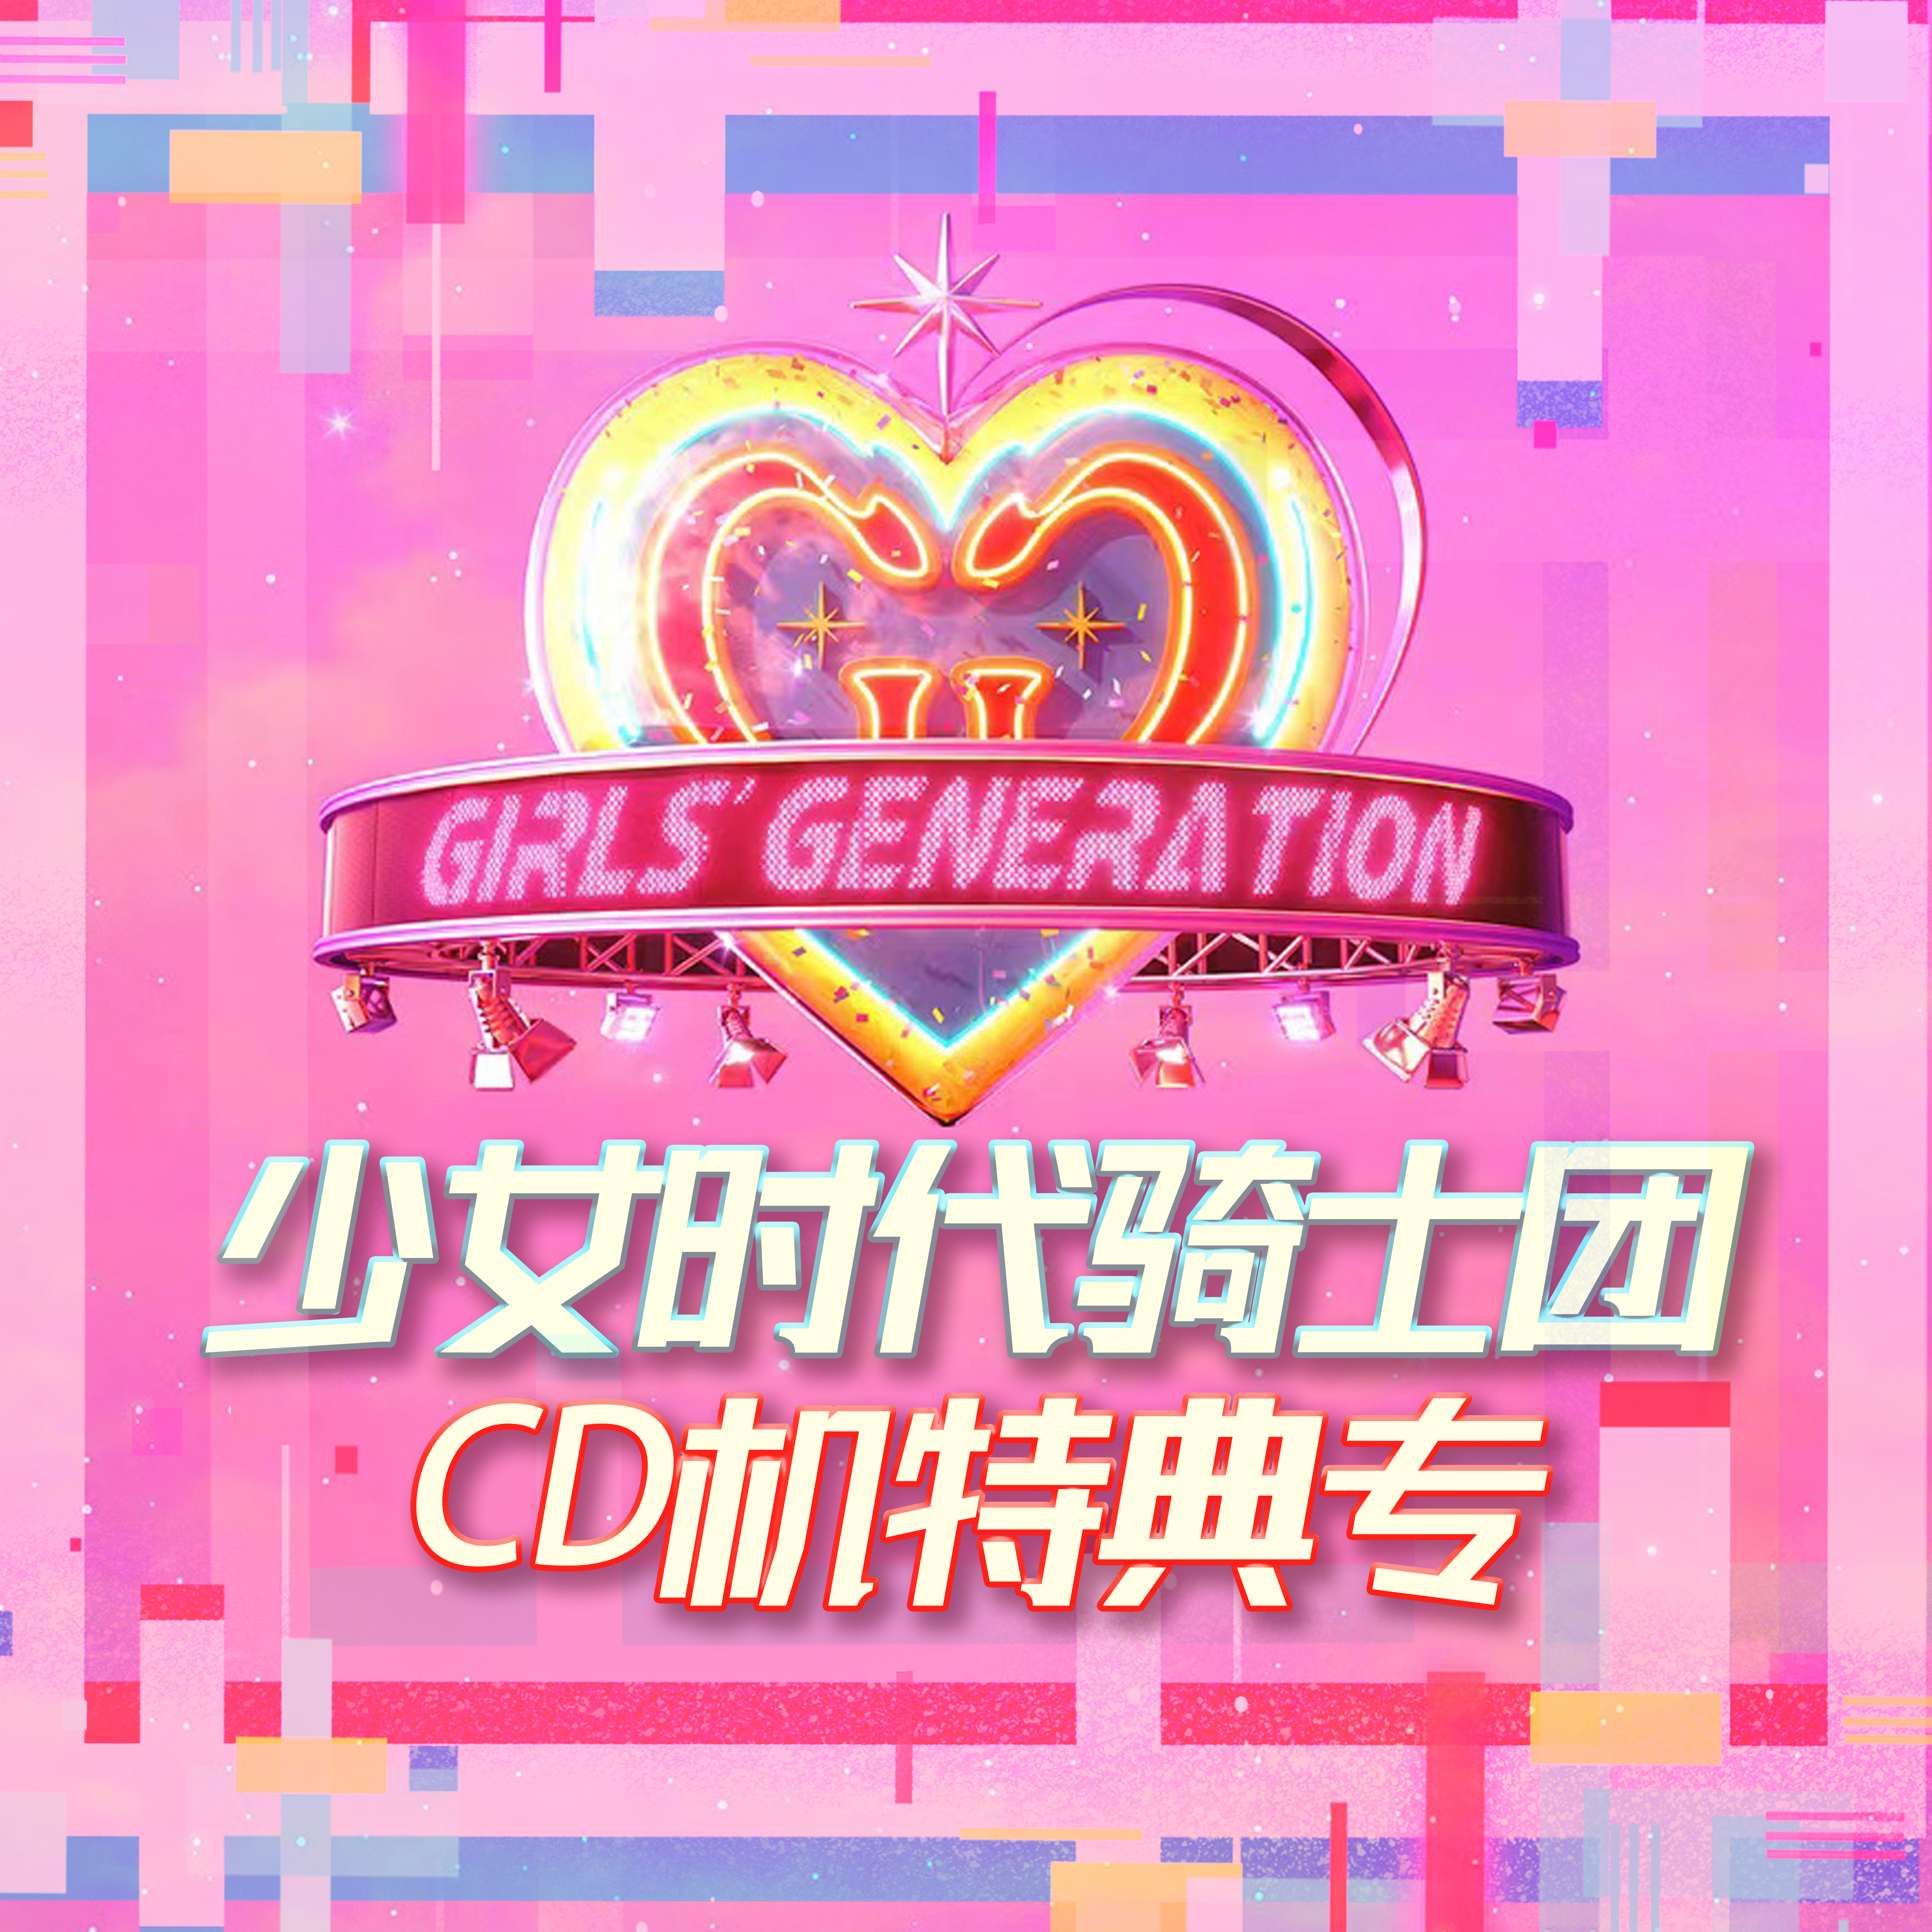 [全款 CD机特典专] Girls’ Generation - 正规专辑 7辑 [FOREVER 1]_少女时代骑士团